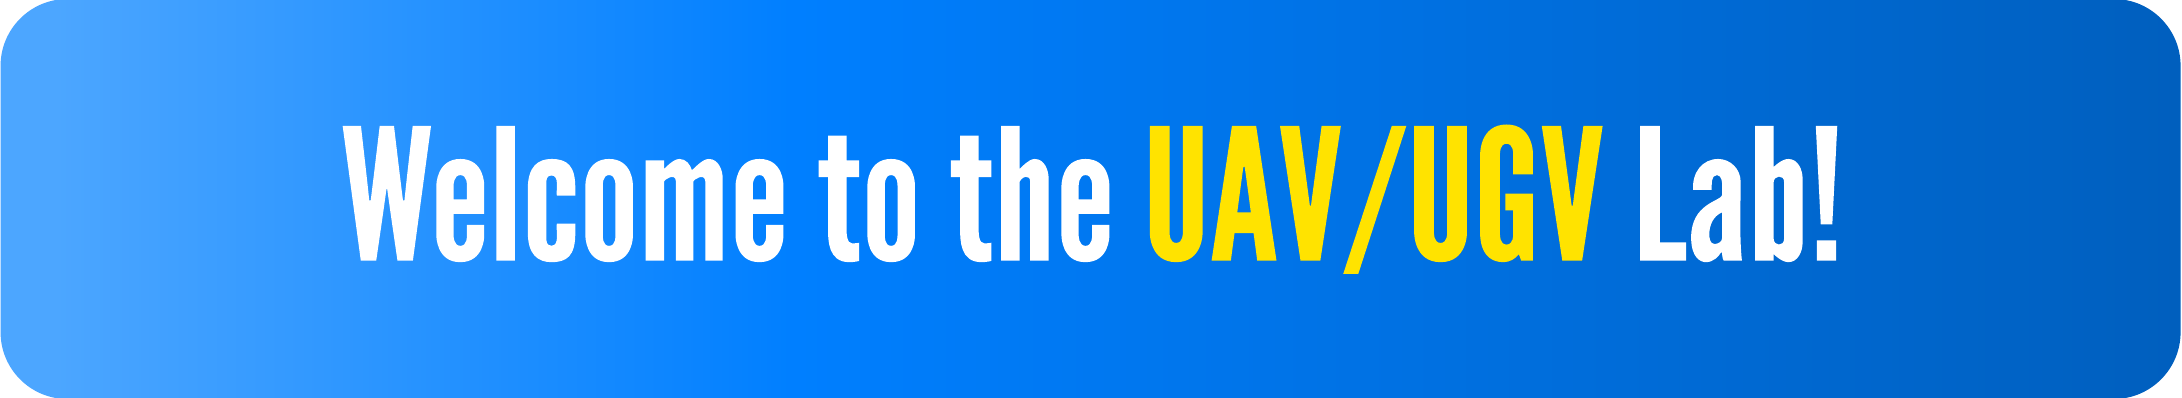 Welcome to the UAV/UGV Lab!